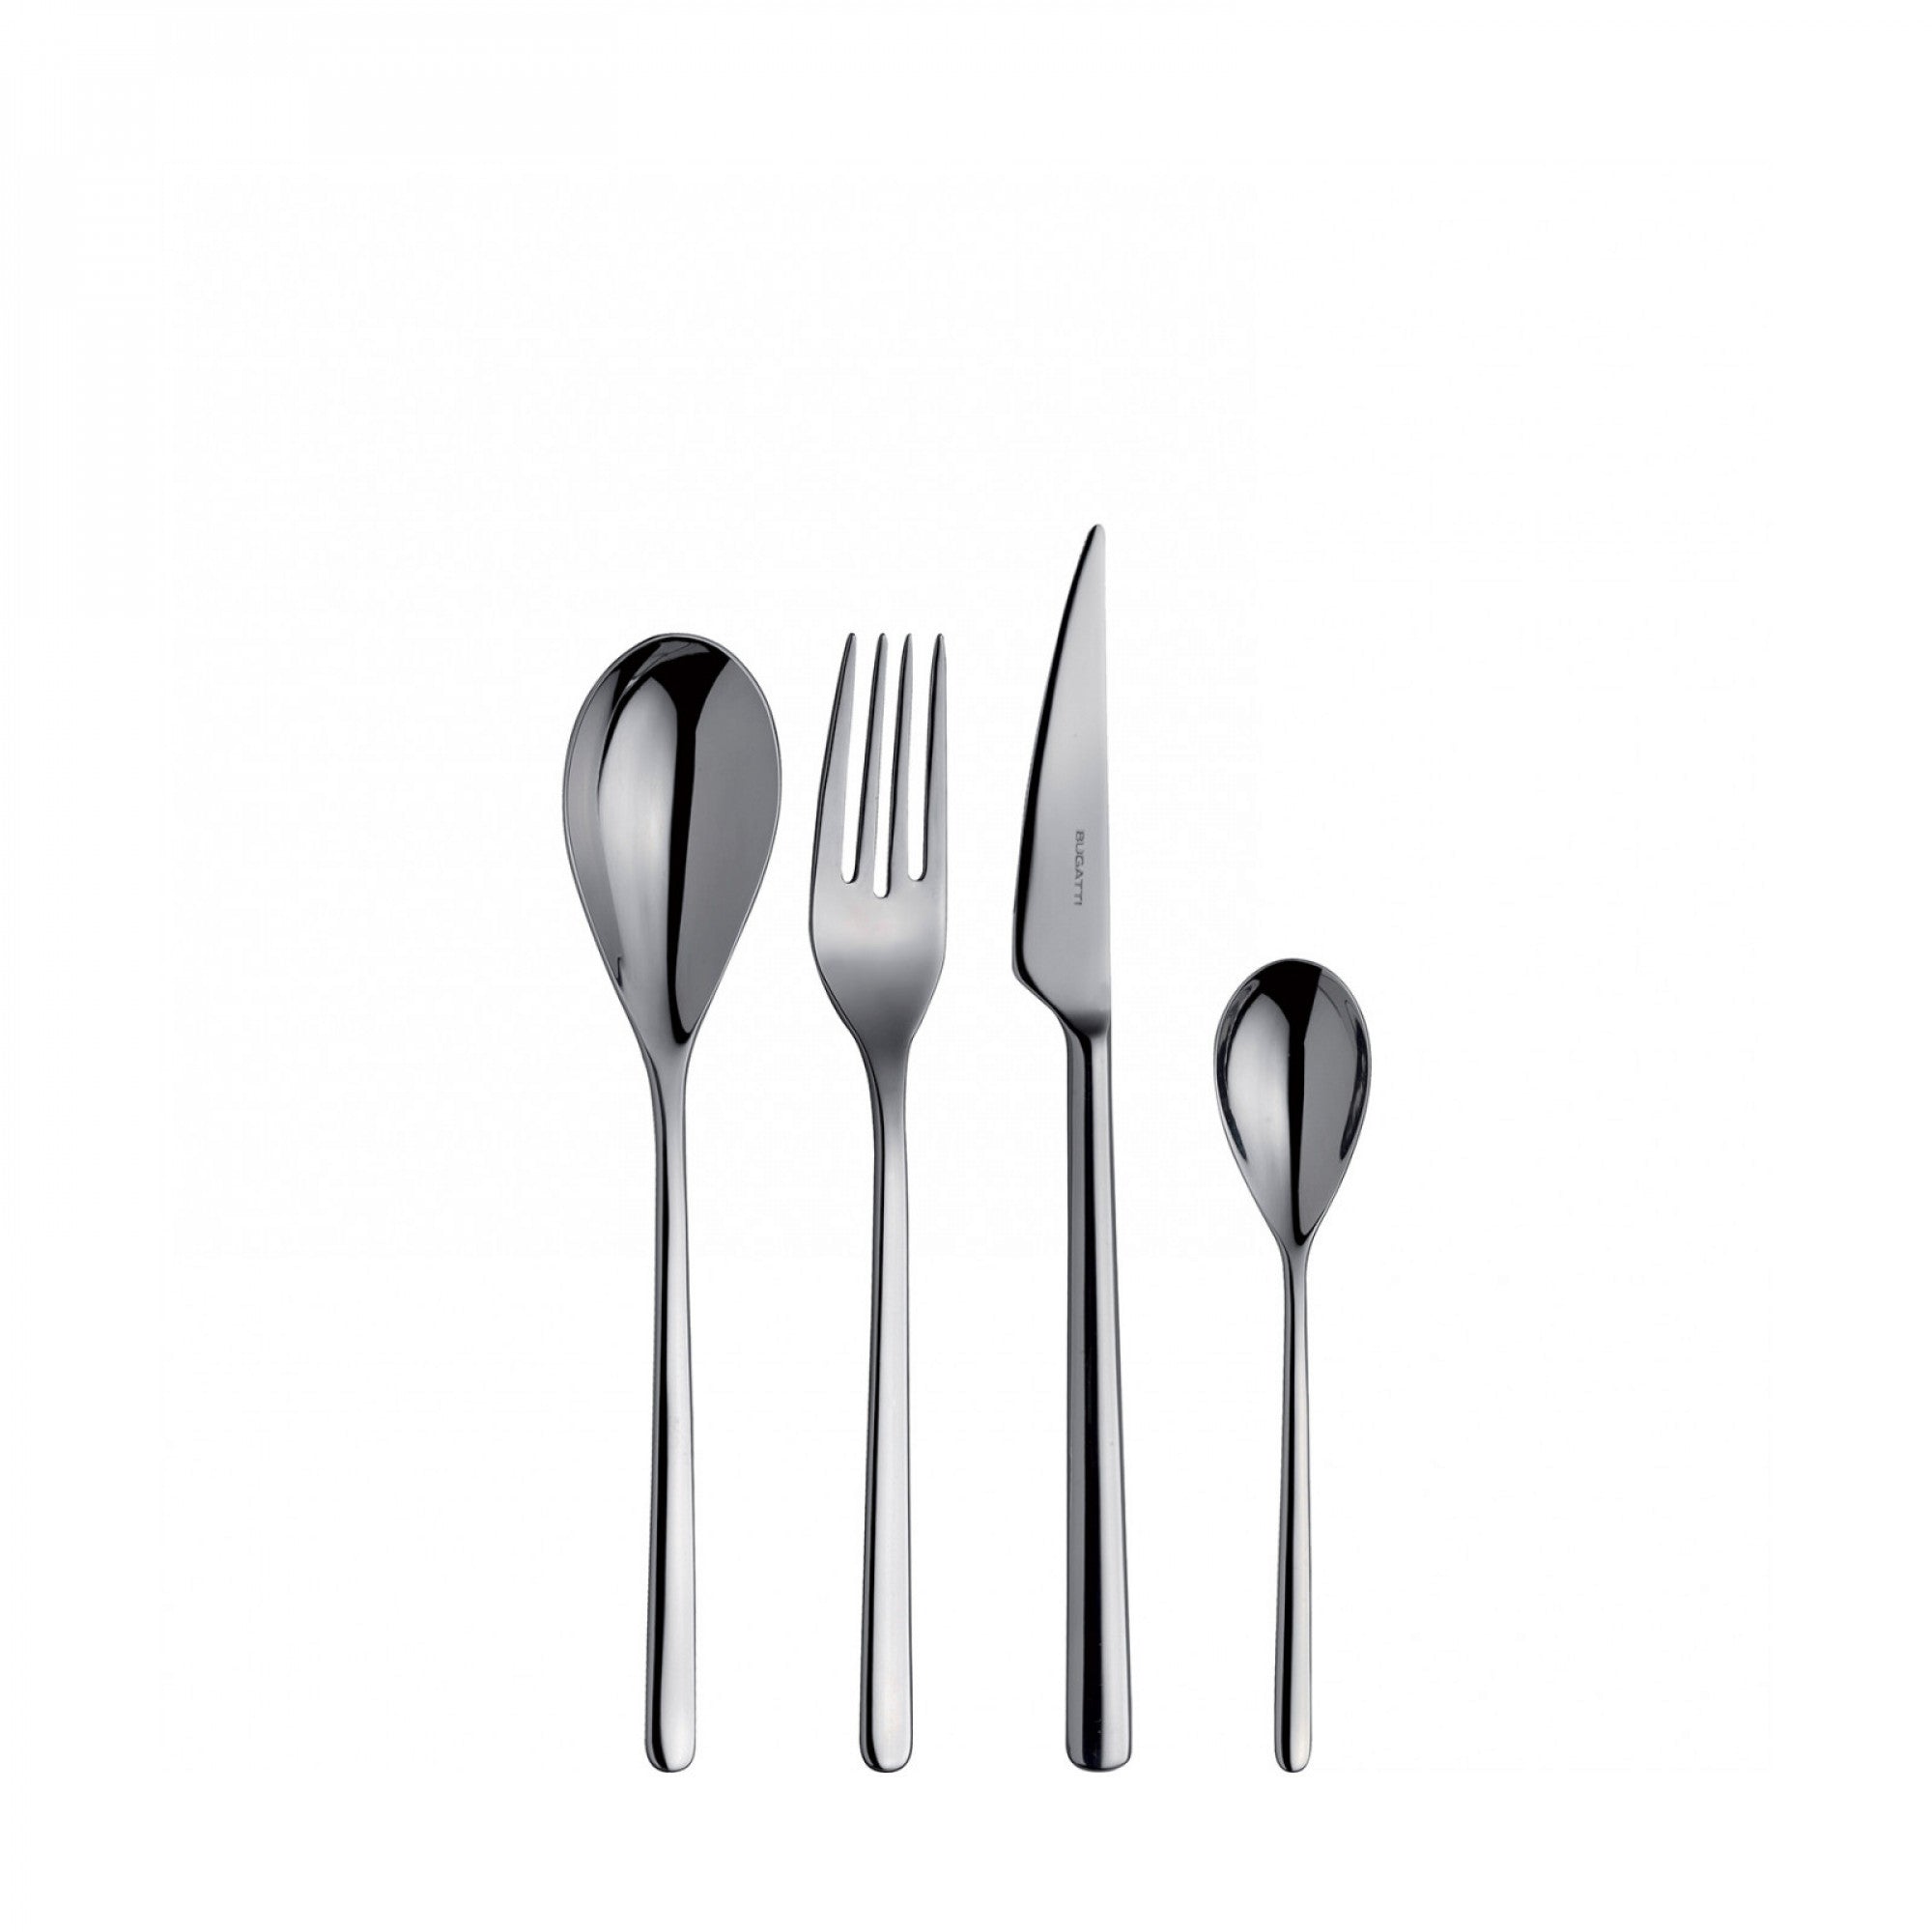 BUGATTI, Sintesi, 24-piece cutlery set in 18/10 stainless steel